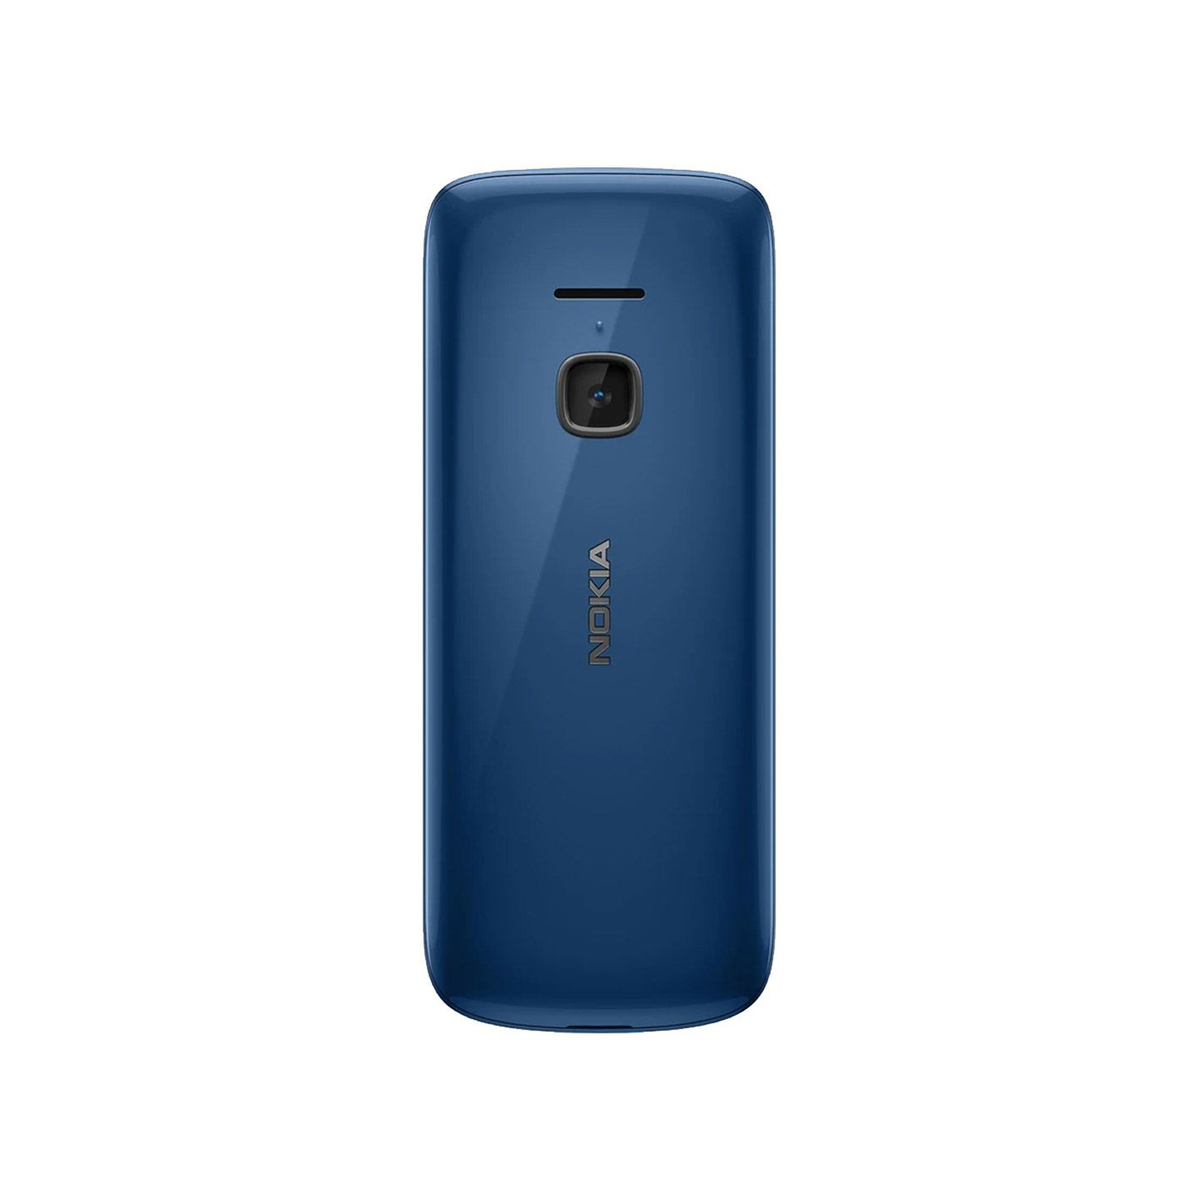 Nokia 225 -TA1279 Dual SIM 4G Classic Blue